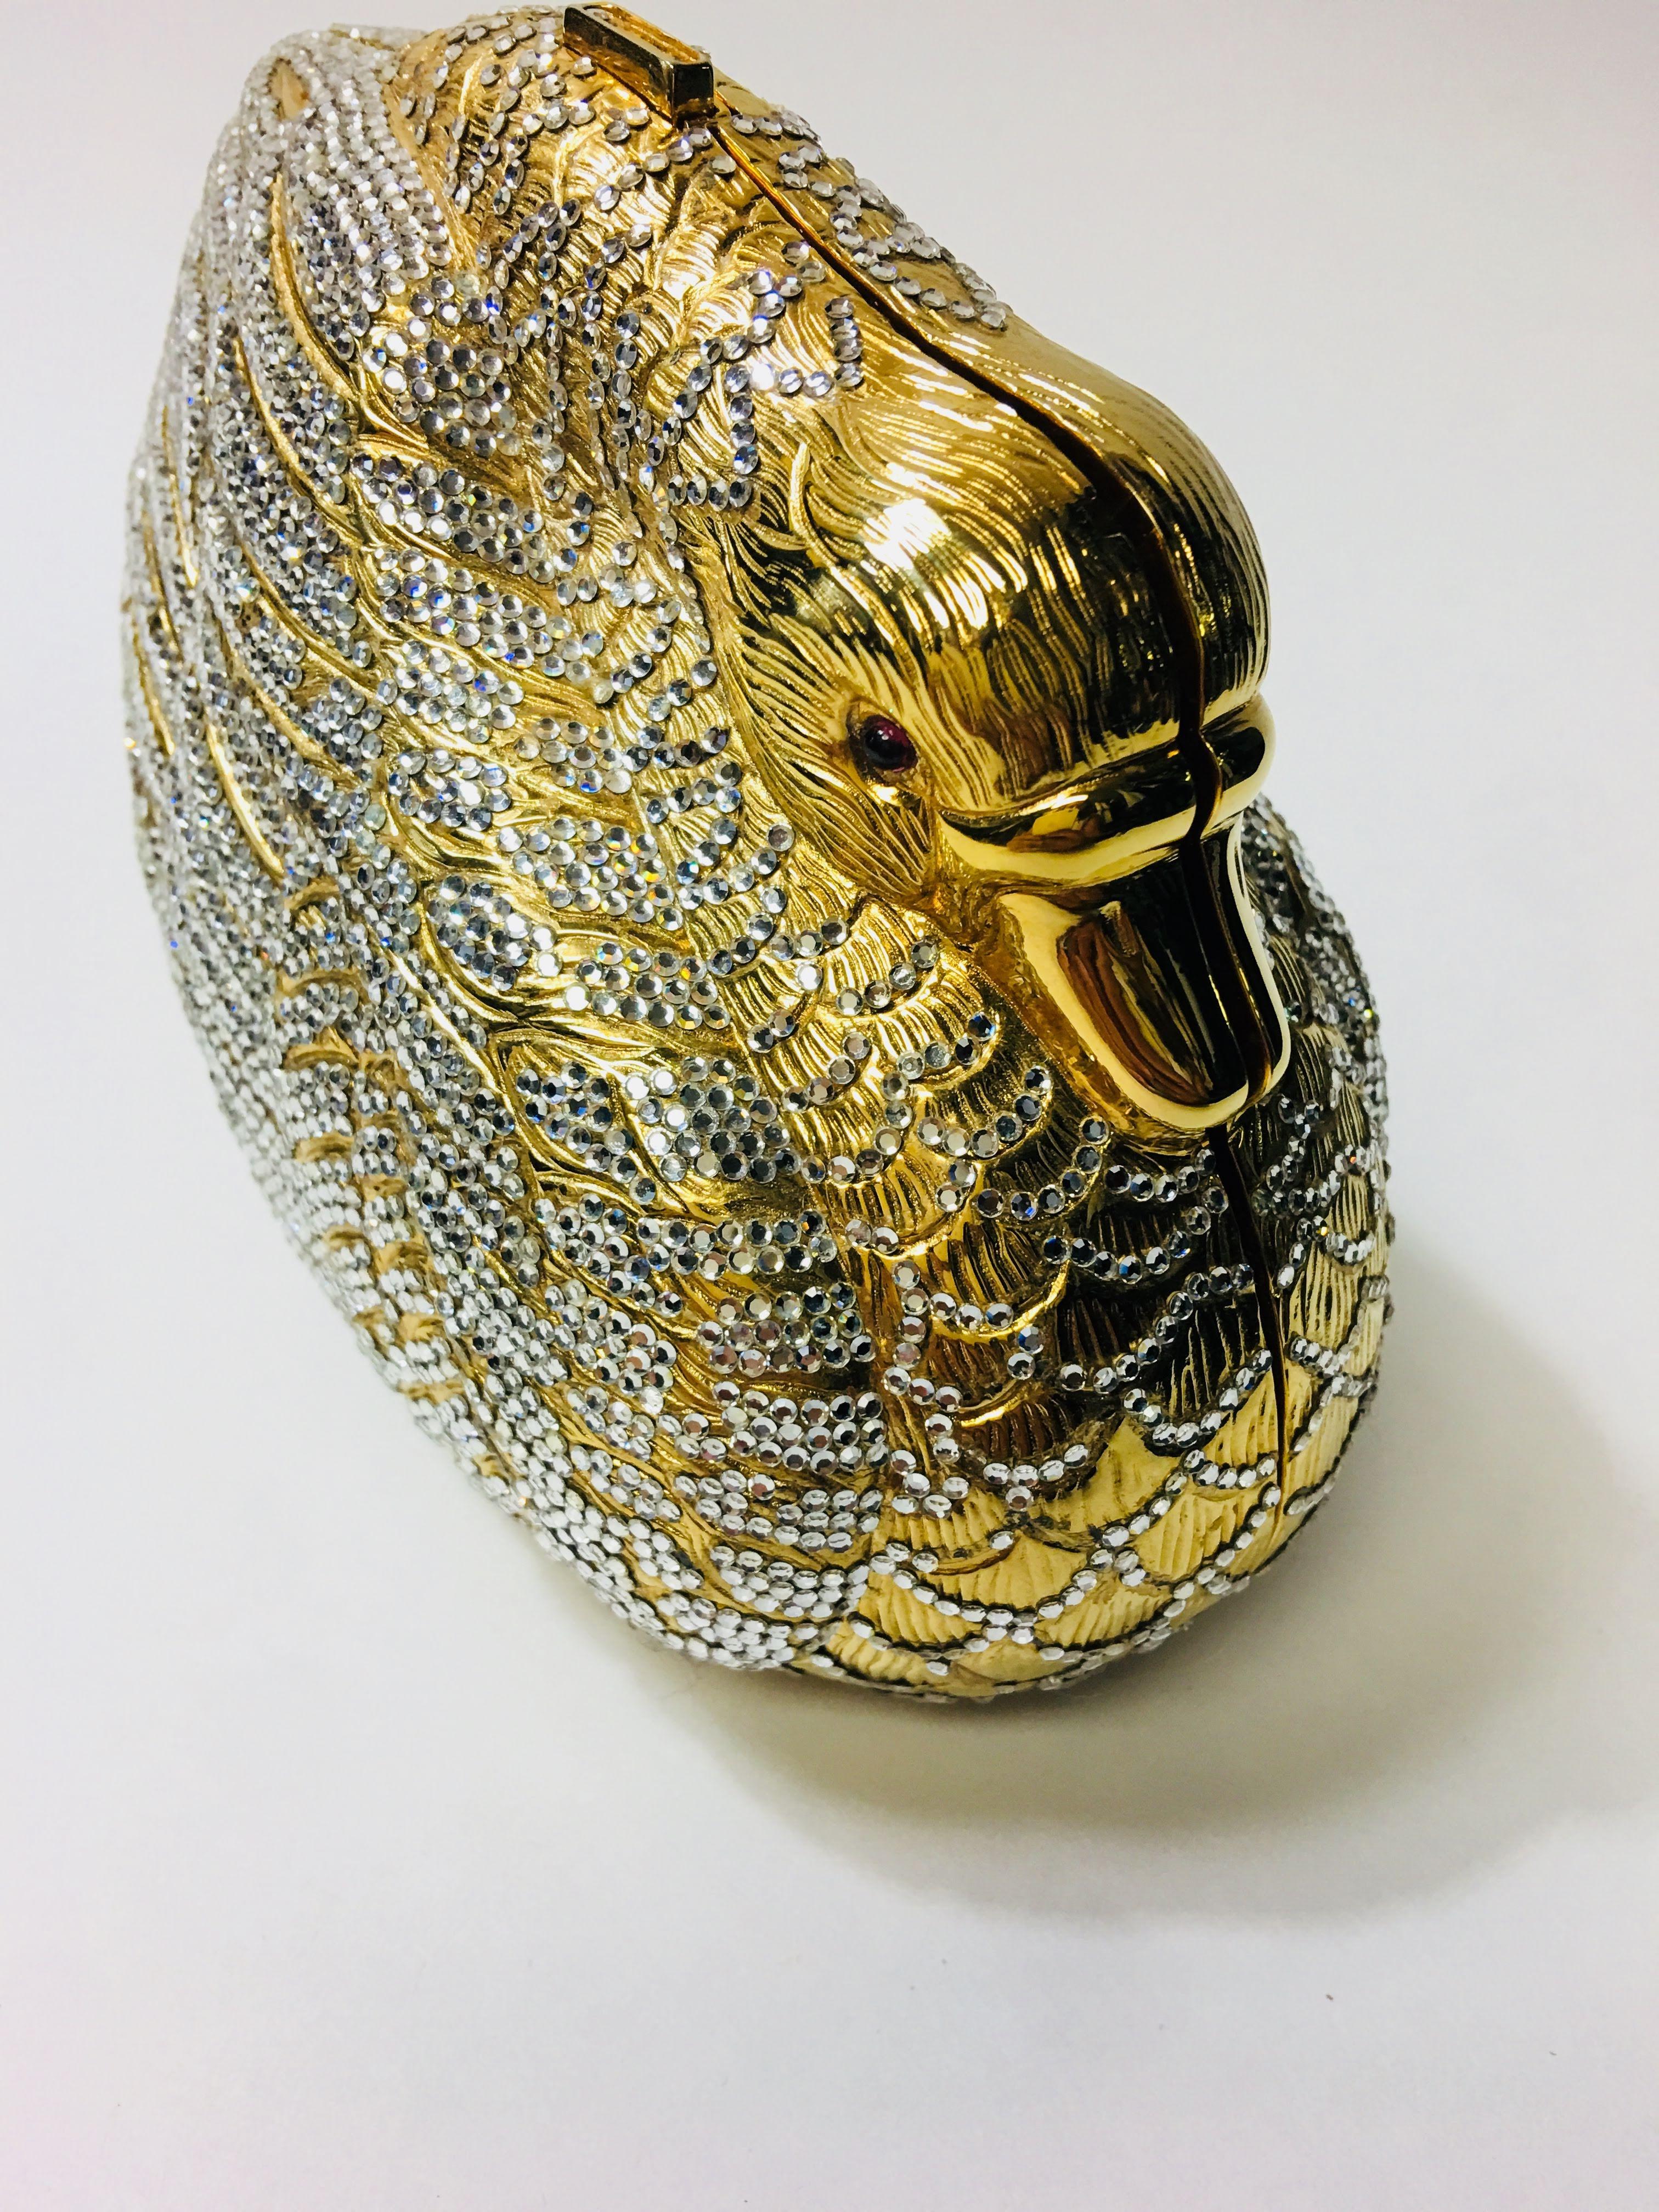 Judith Leiber Embellished Gold Swan Clutch with Gold Chain Shoulder Strap.
Original Packaging. 
Measures 6